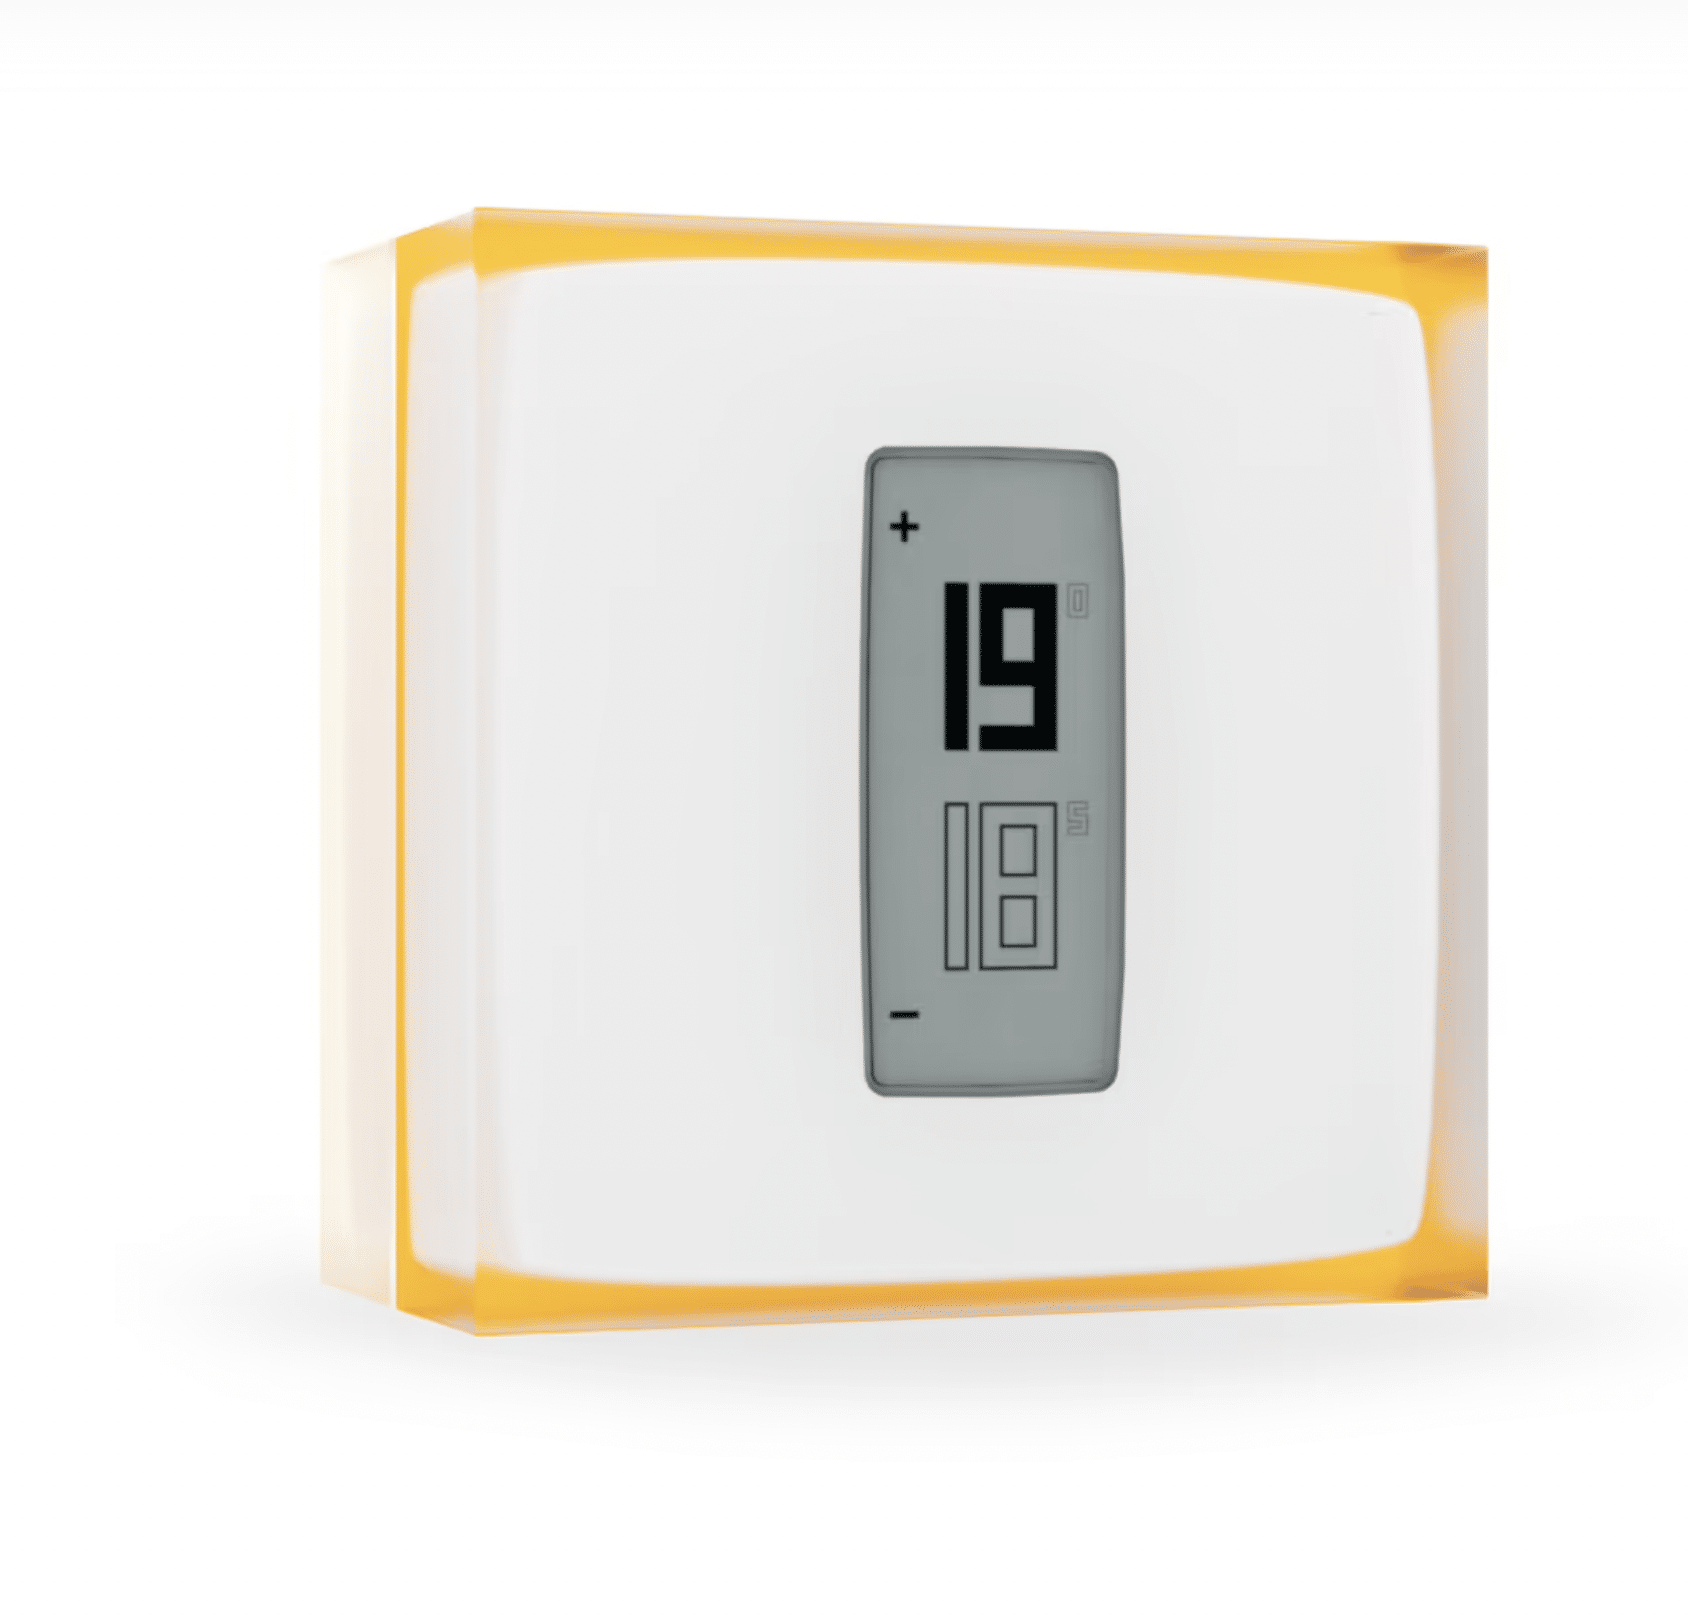 NETATMO PRO - Le thermostat connecté - ENR Distribution, netatmo 